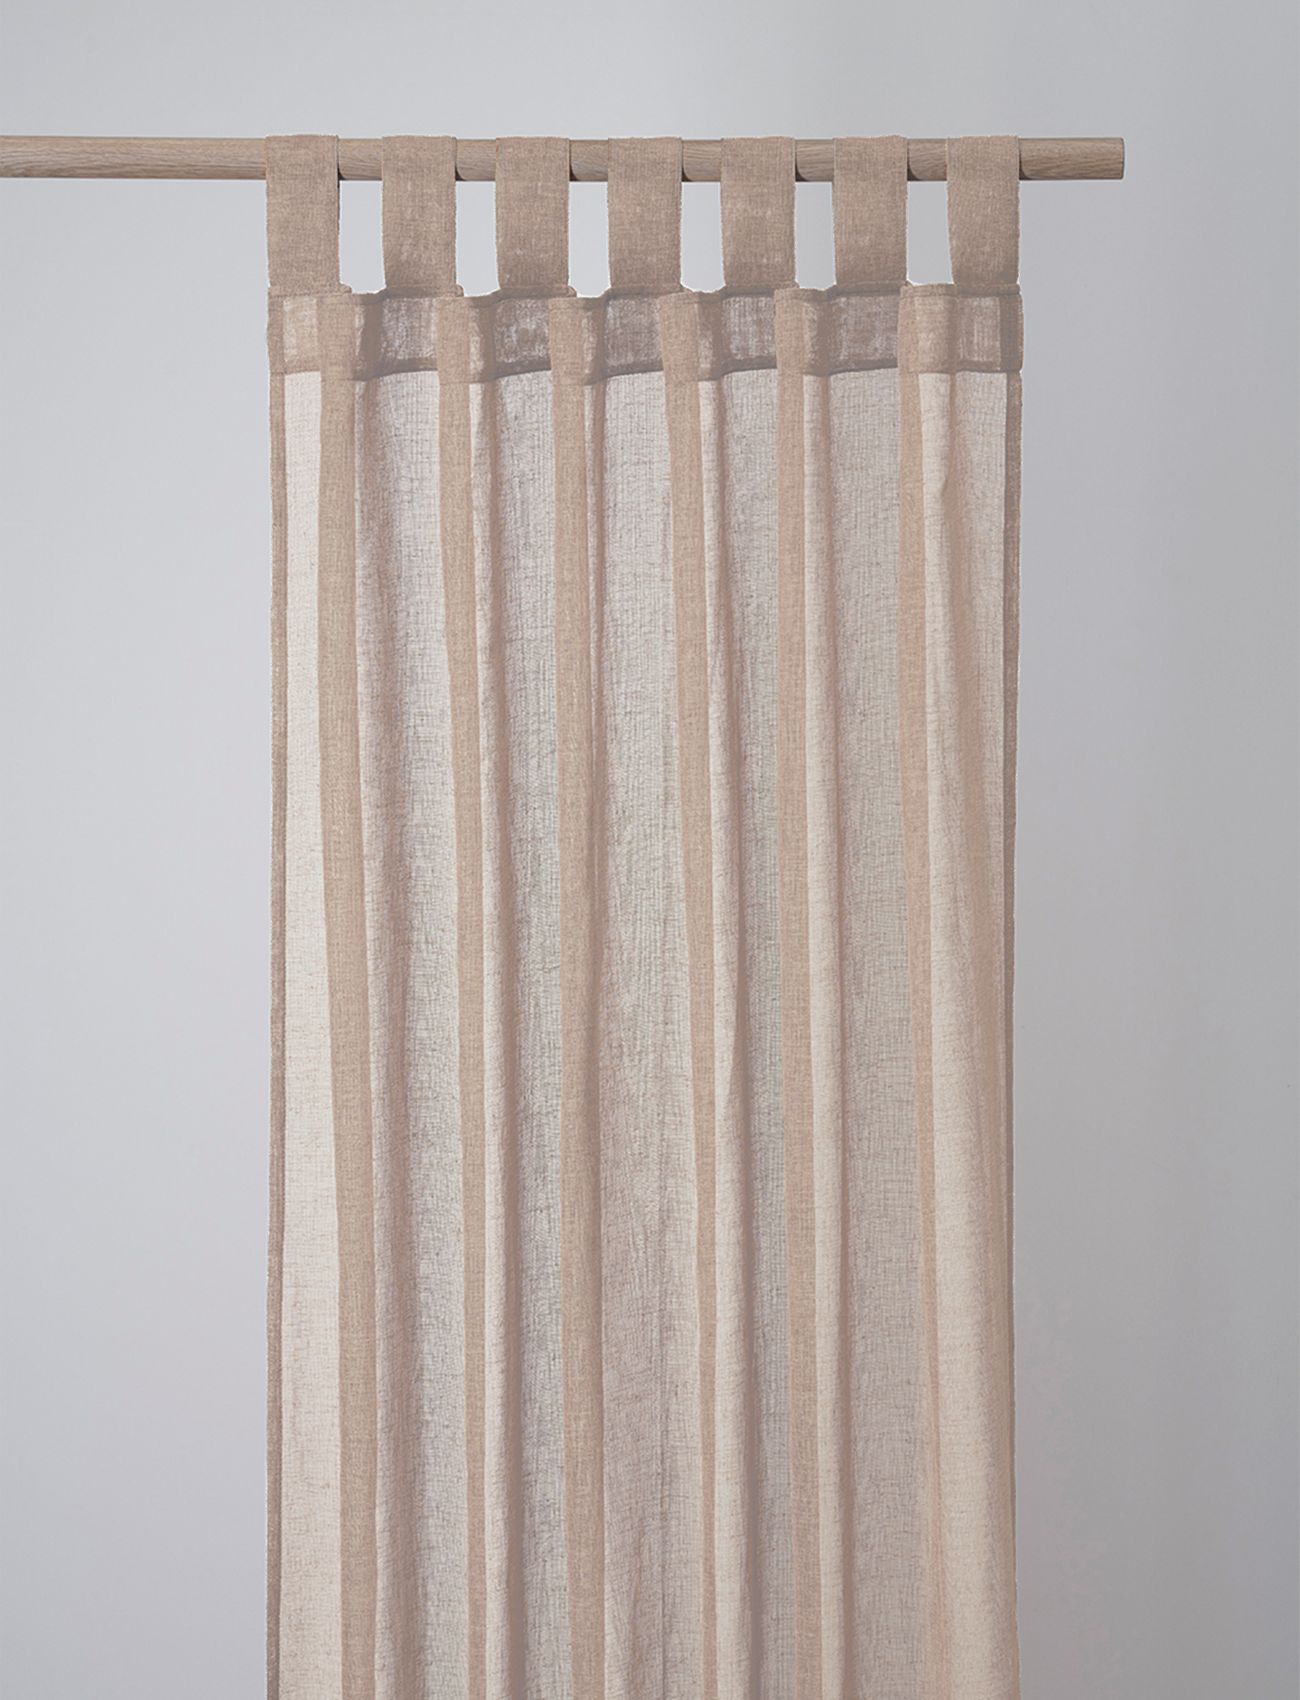 compliments - Boho Curtain 140x260 cm w/loops - fertiggardinen - sand - 0